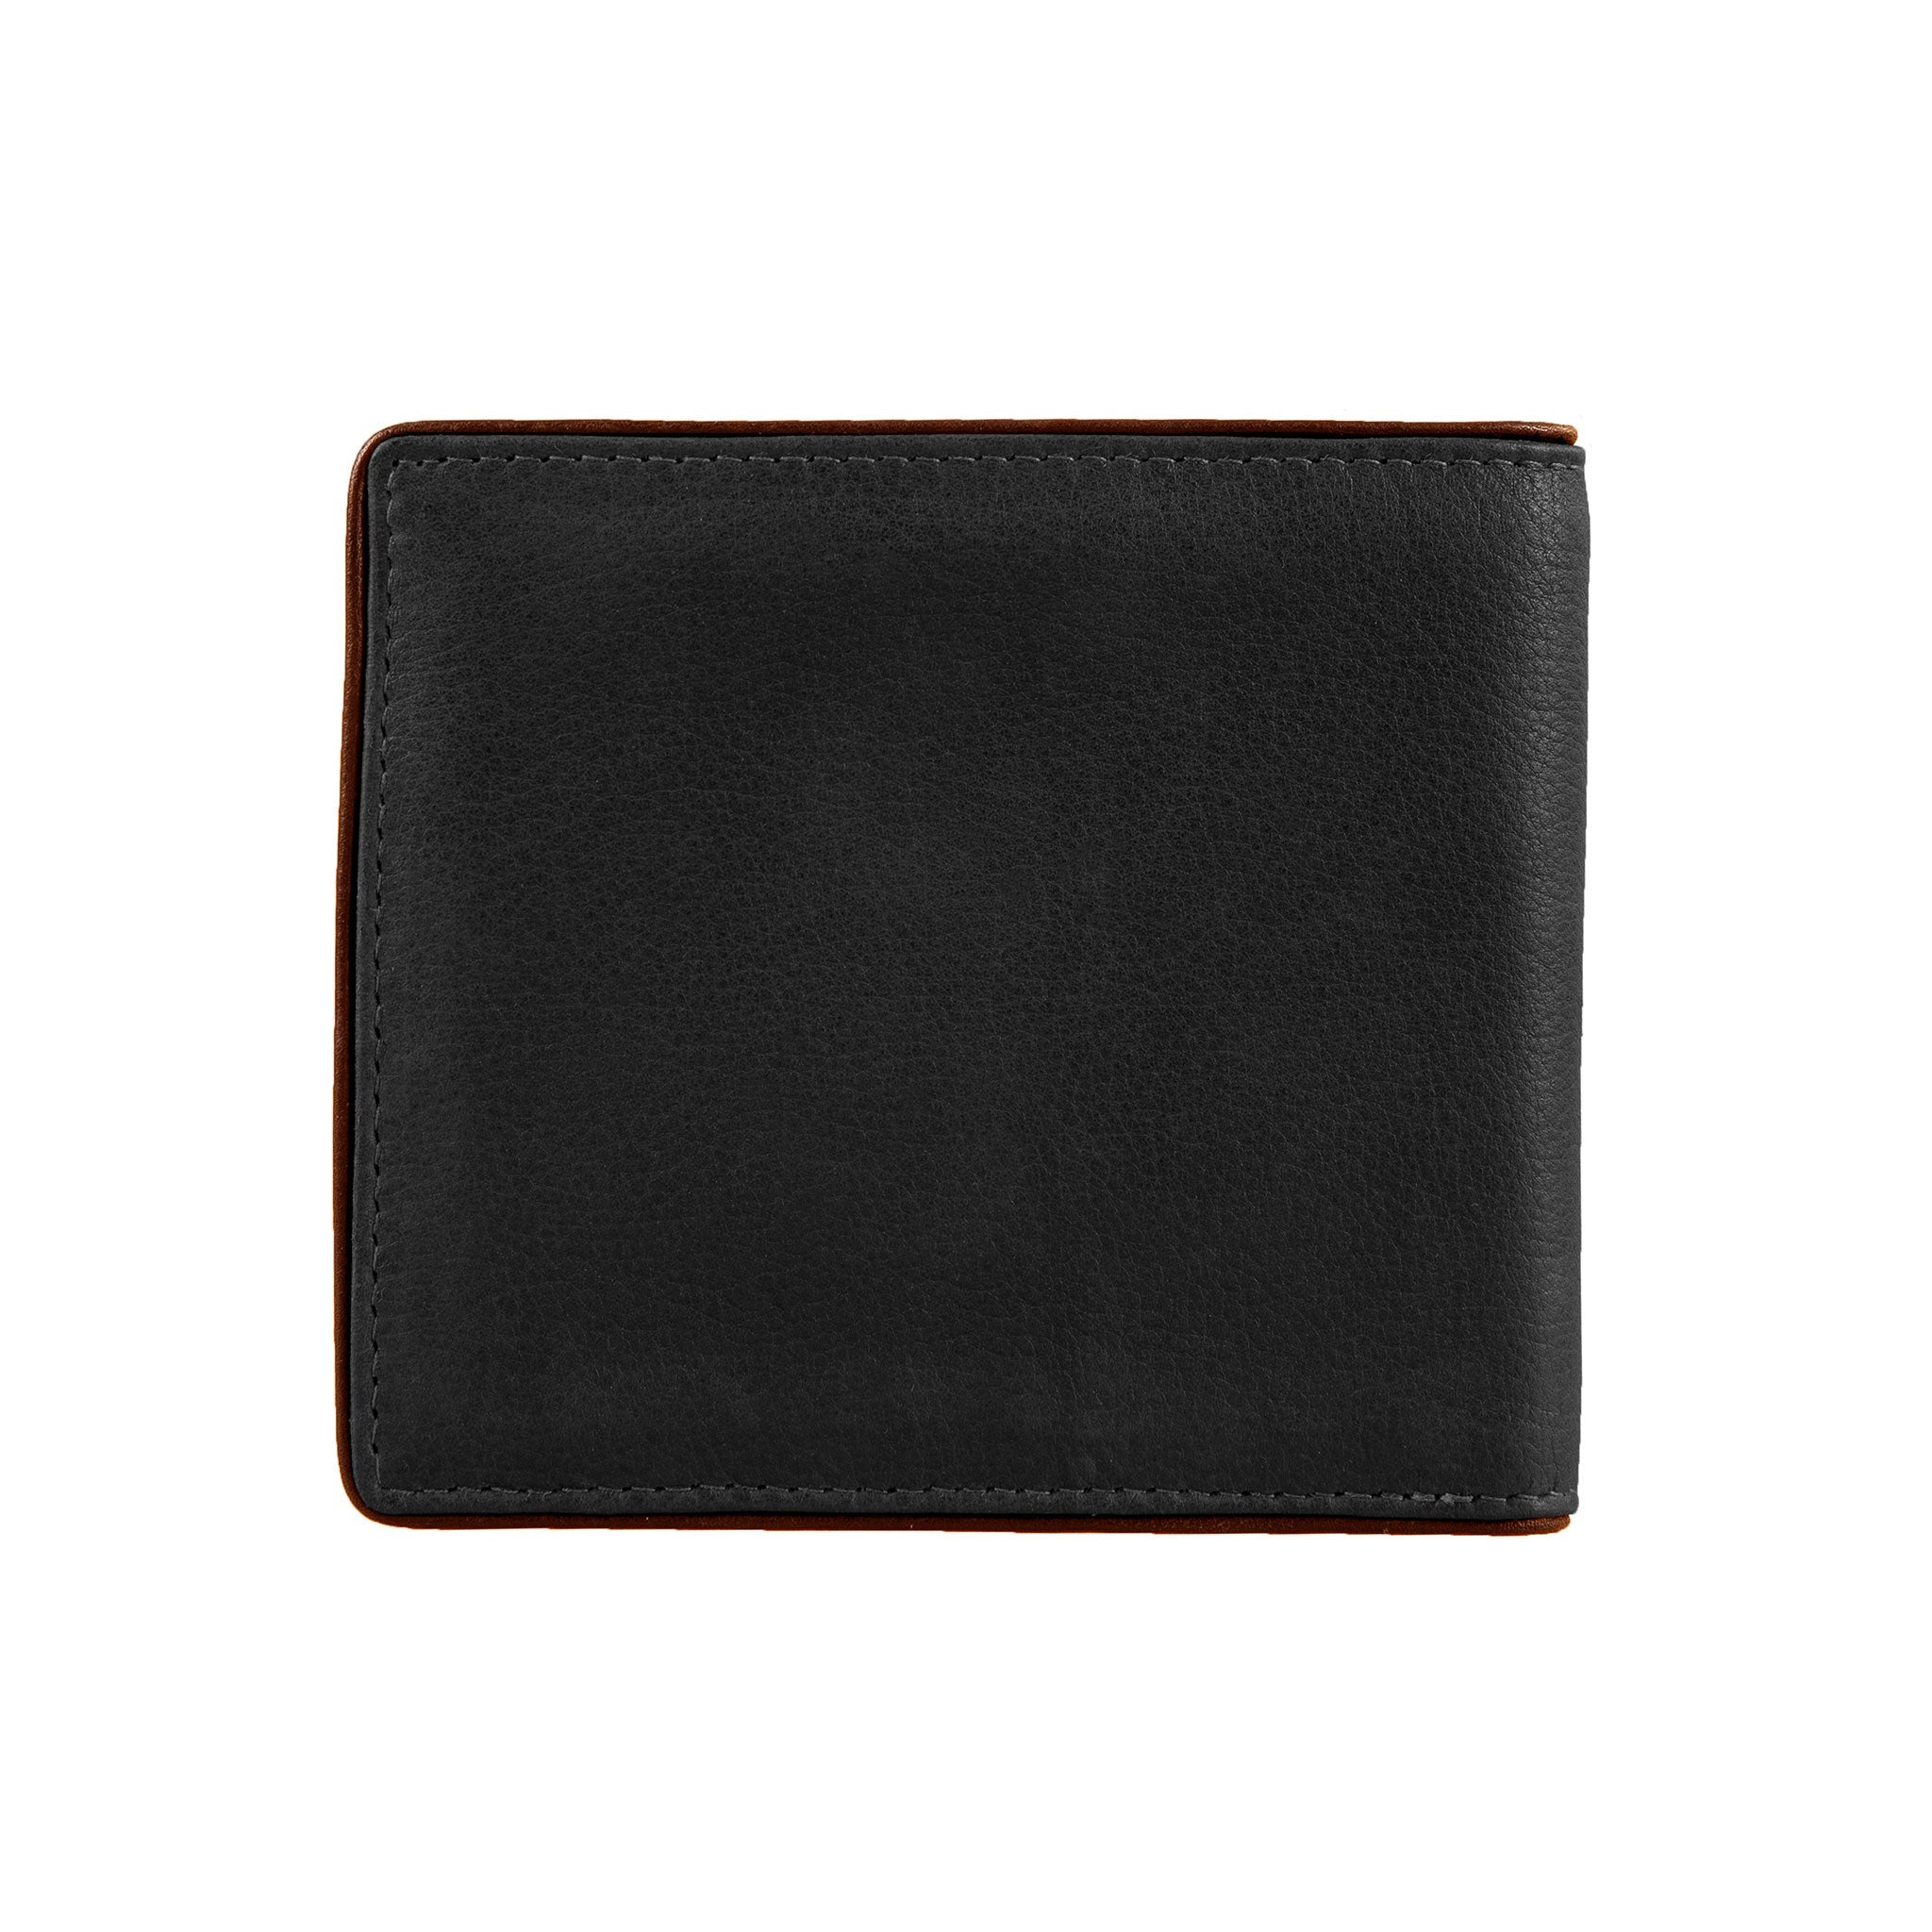 Leather men's wallet with coin purse, black | BRUCLE Versatile